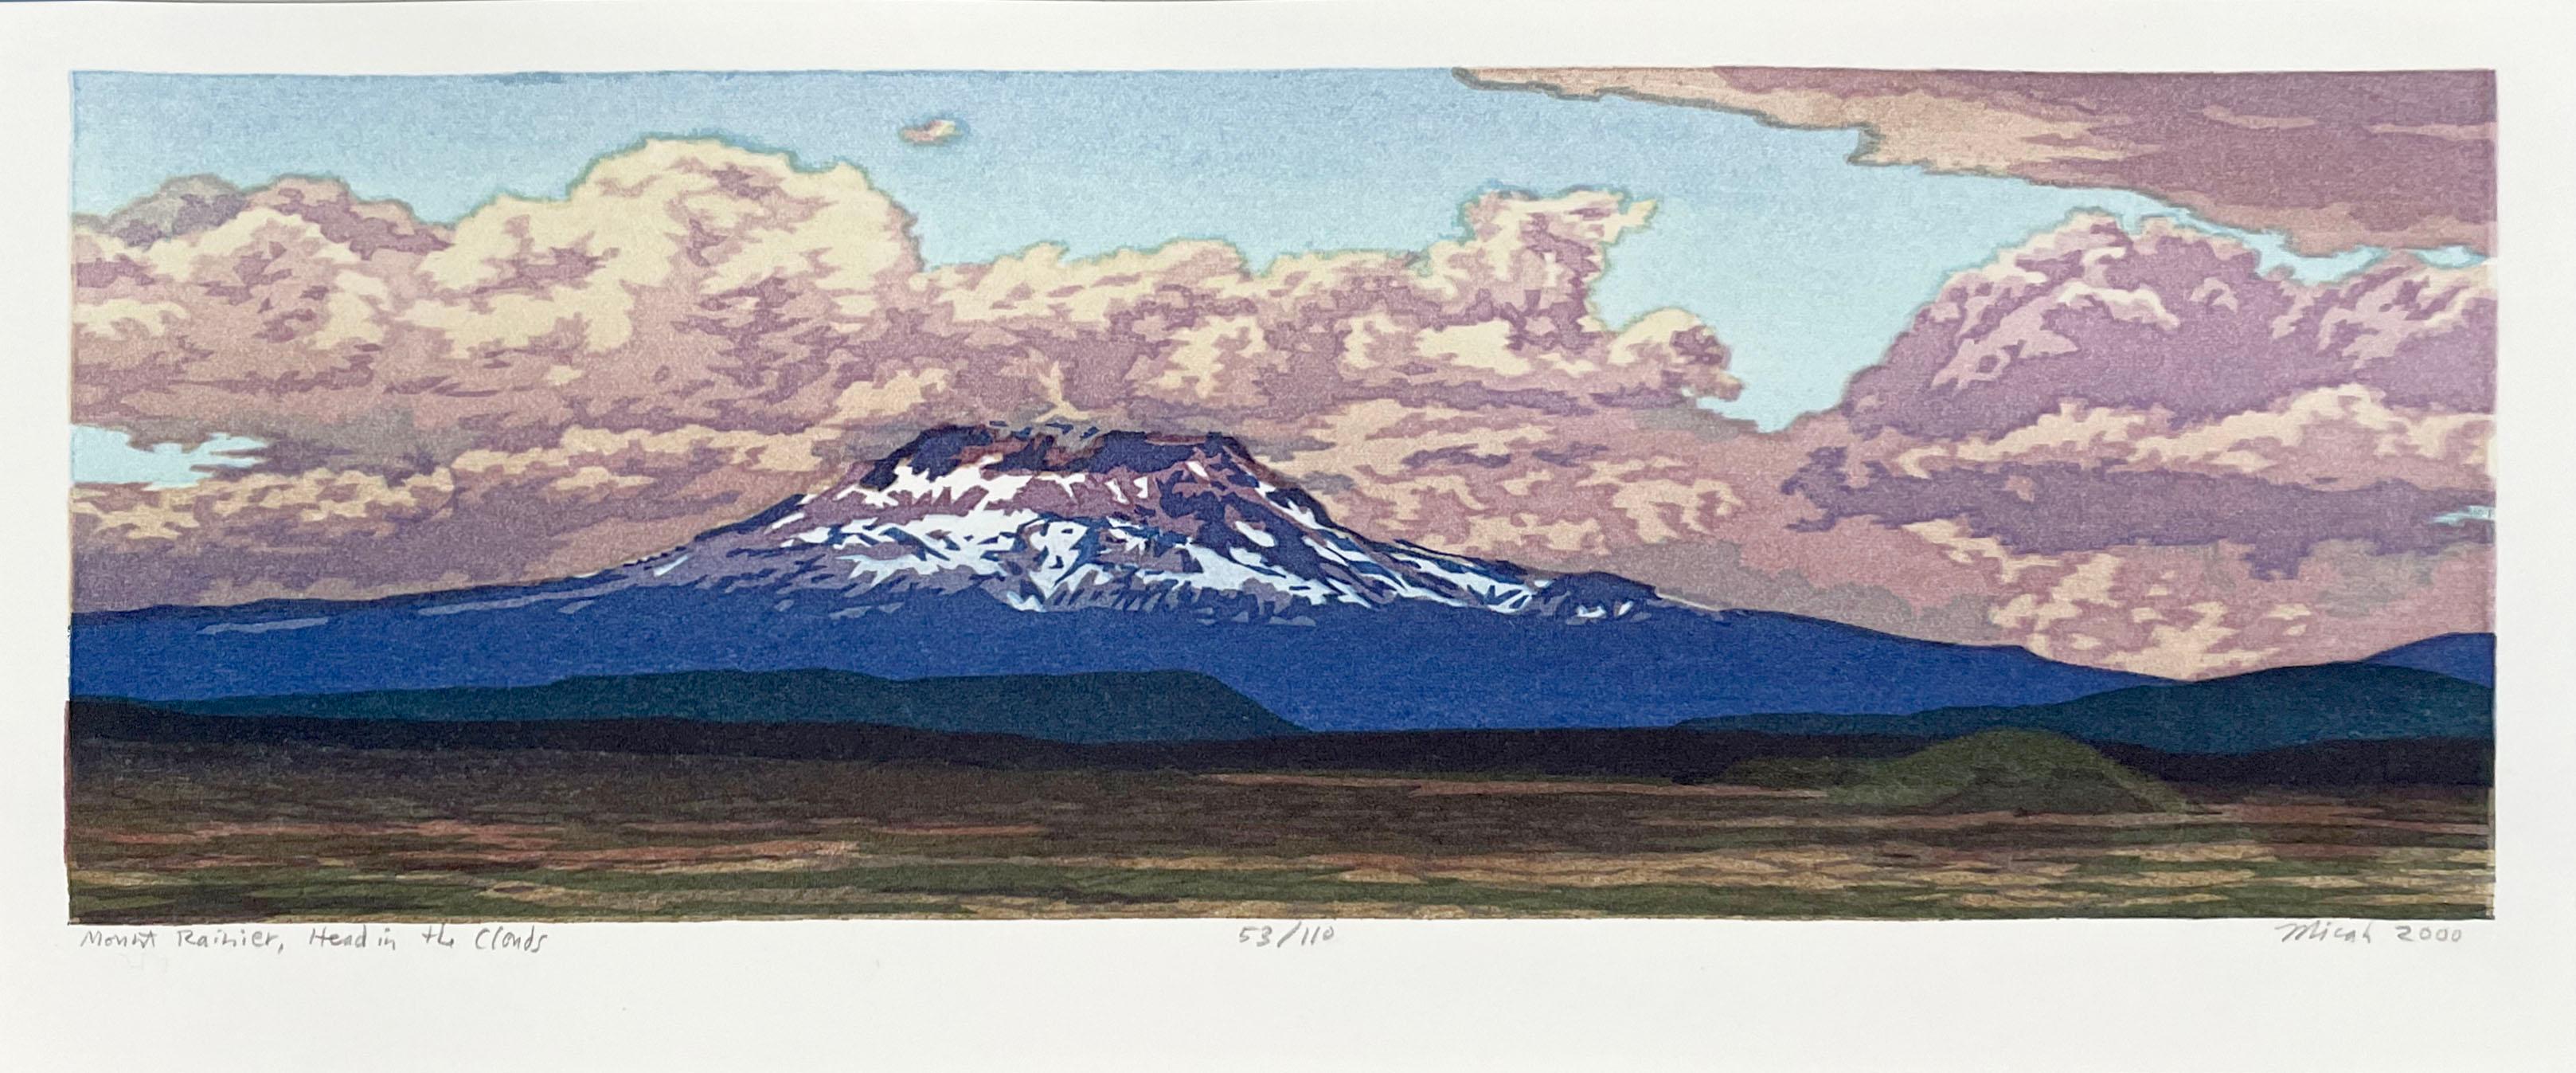 Mount Rainier, Head in the Clouds - Print by Micah Schwaberow